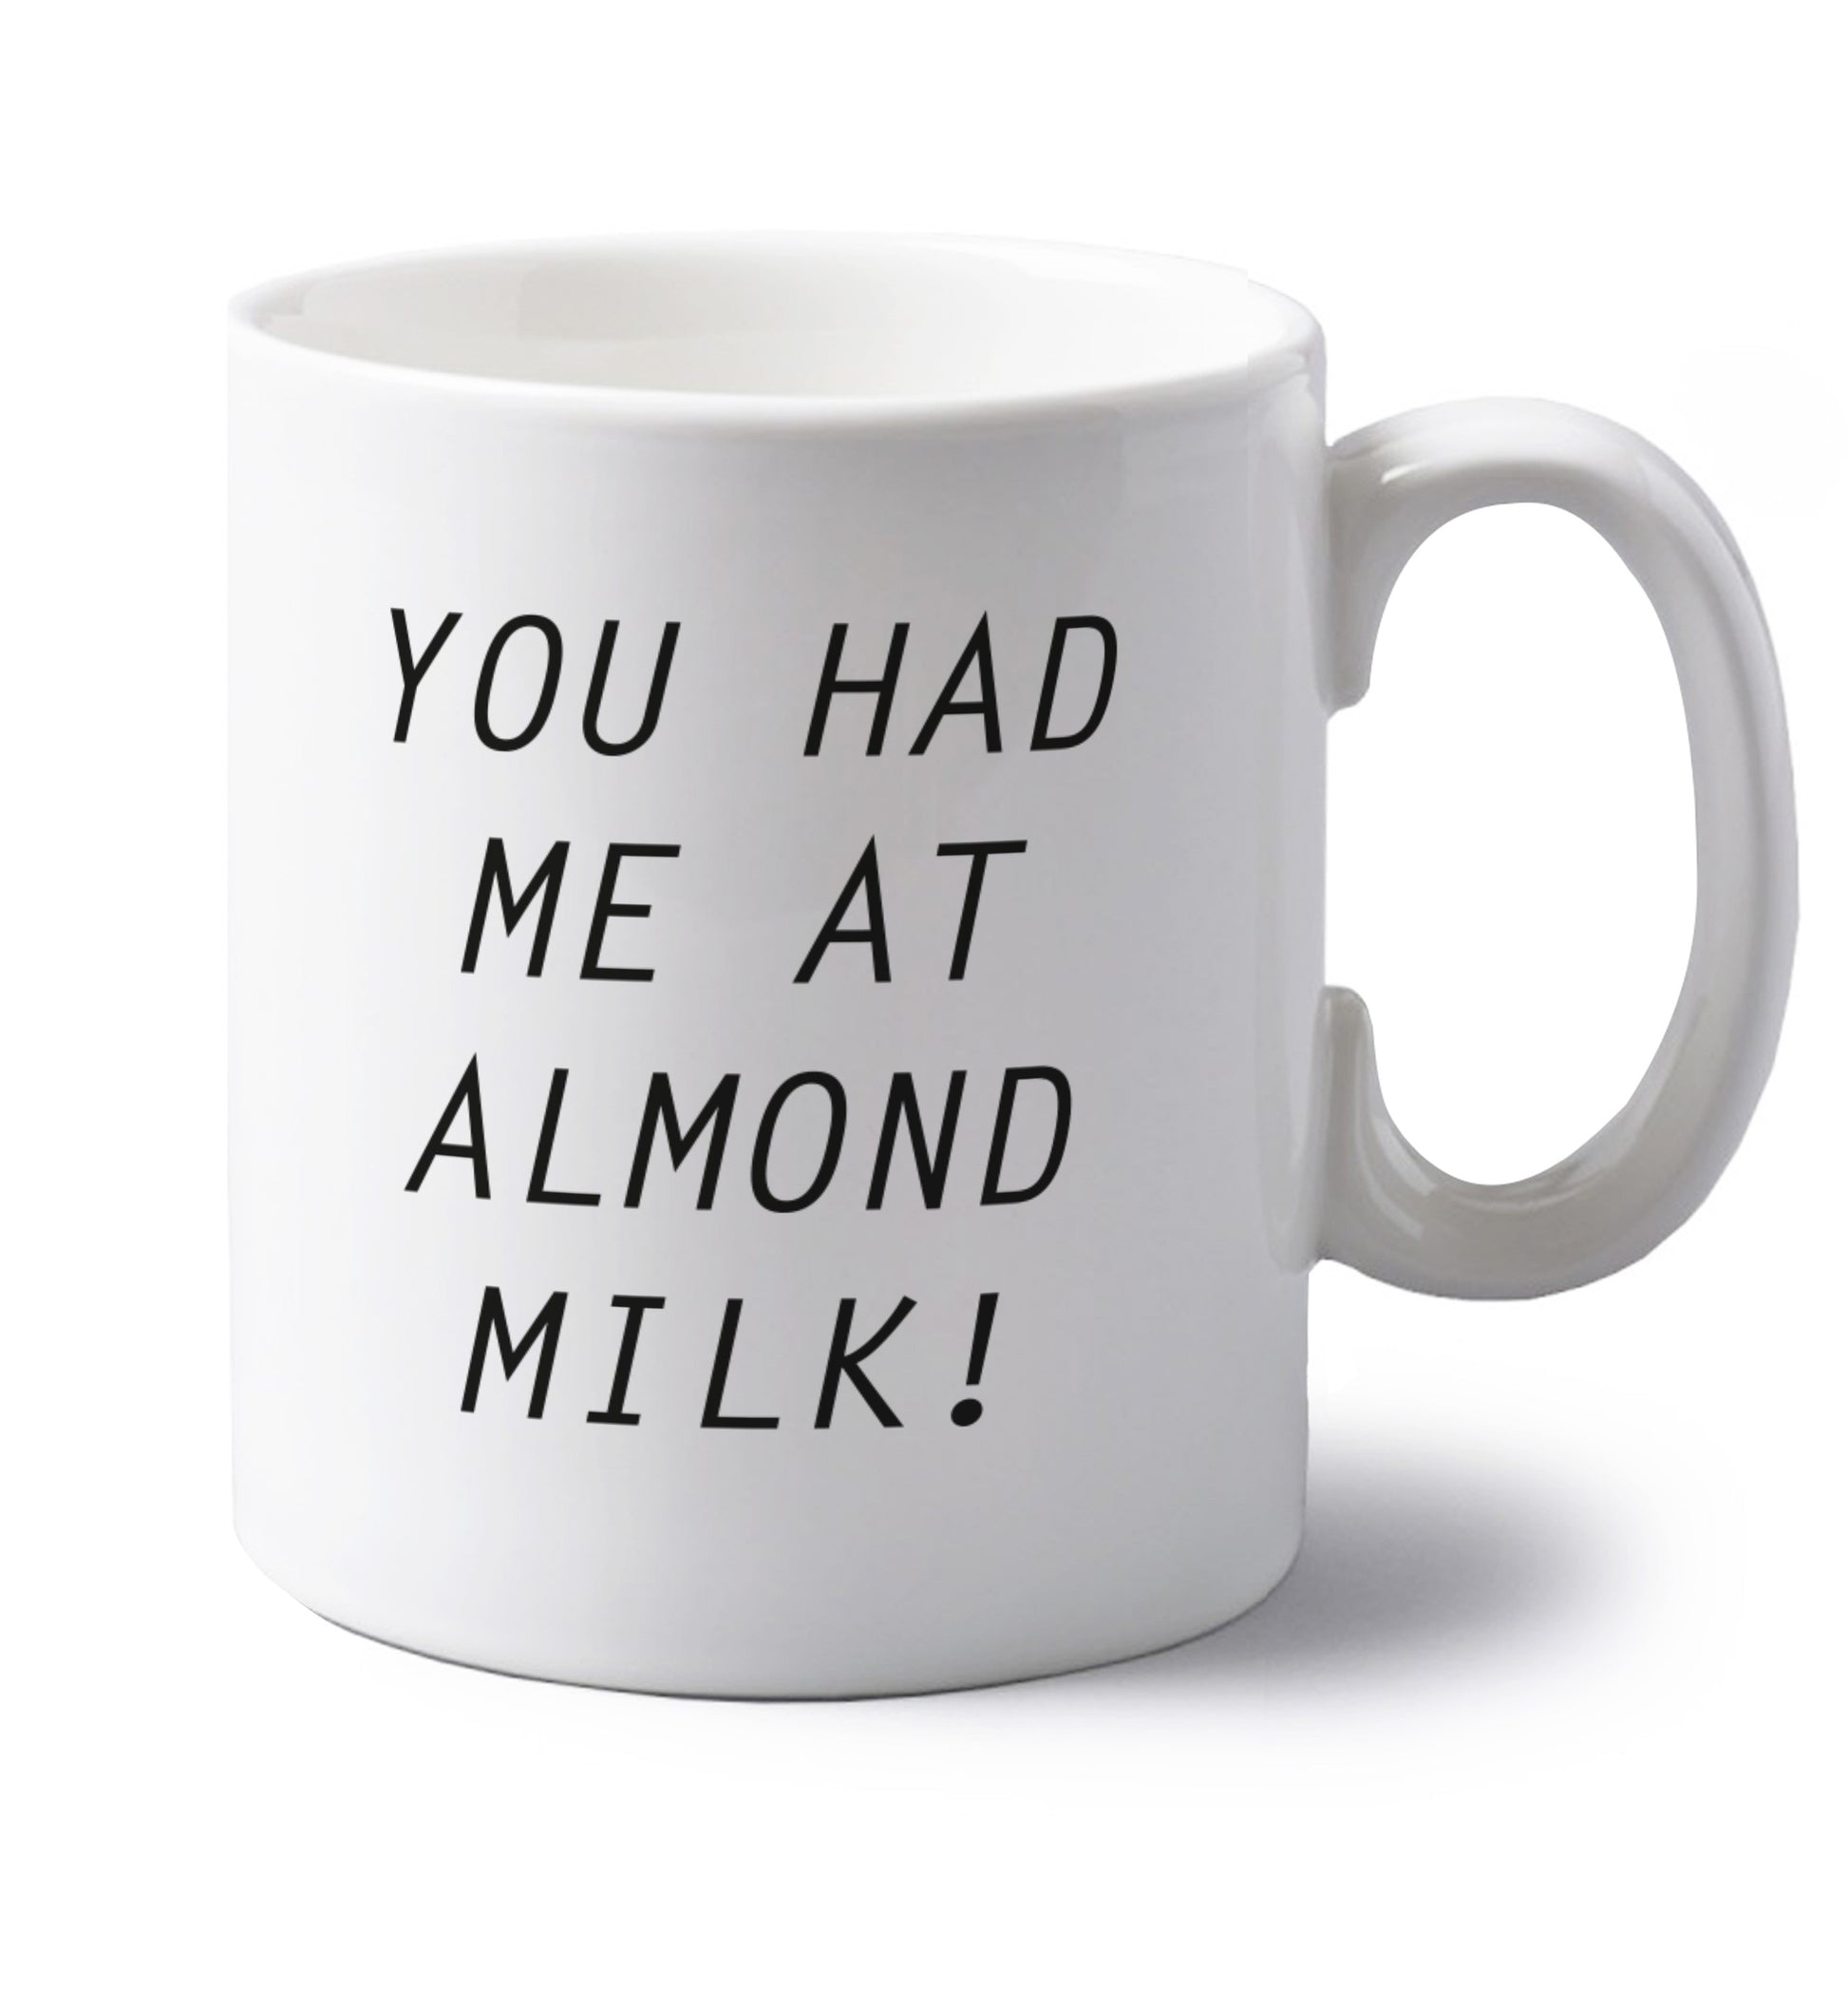 You had me at almond milk left handed white ceramic mug 